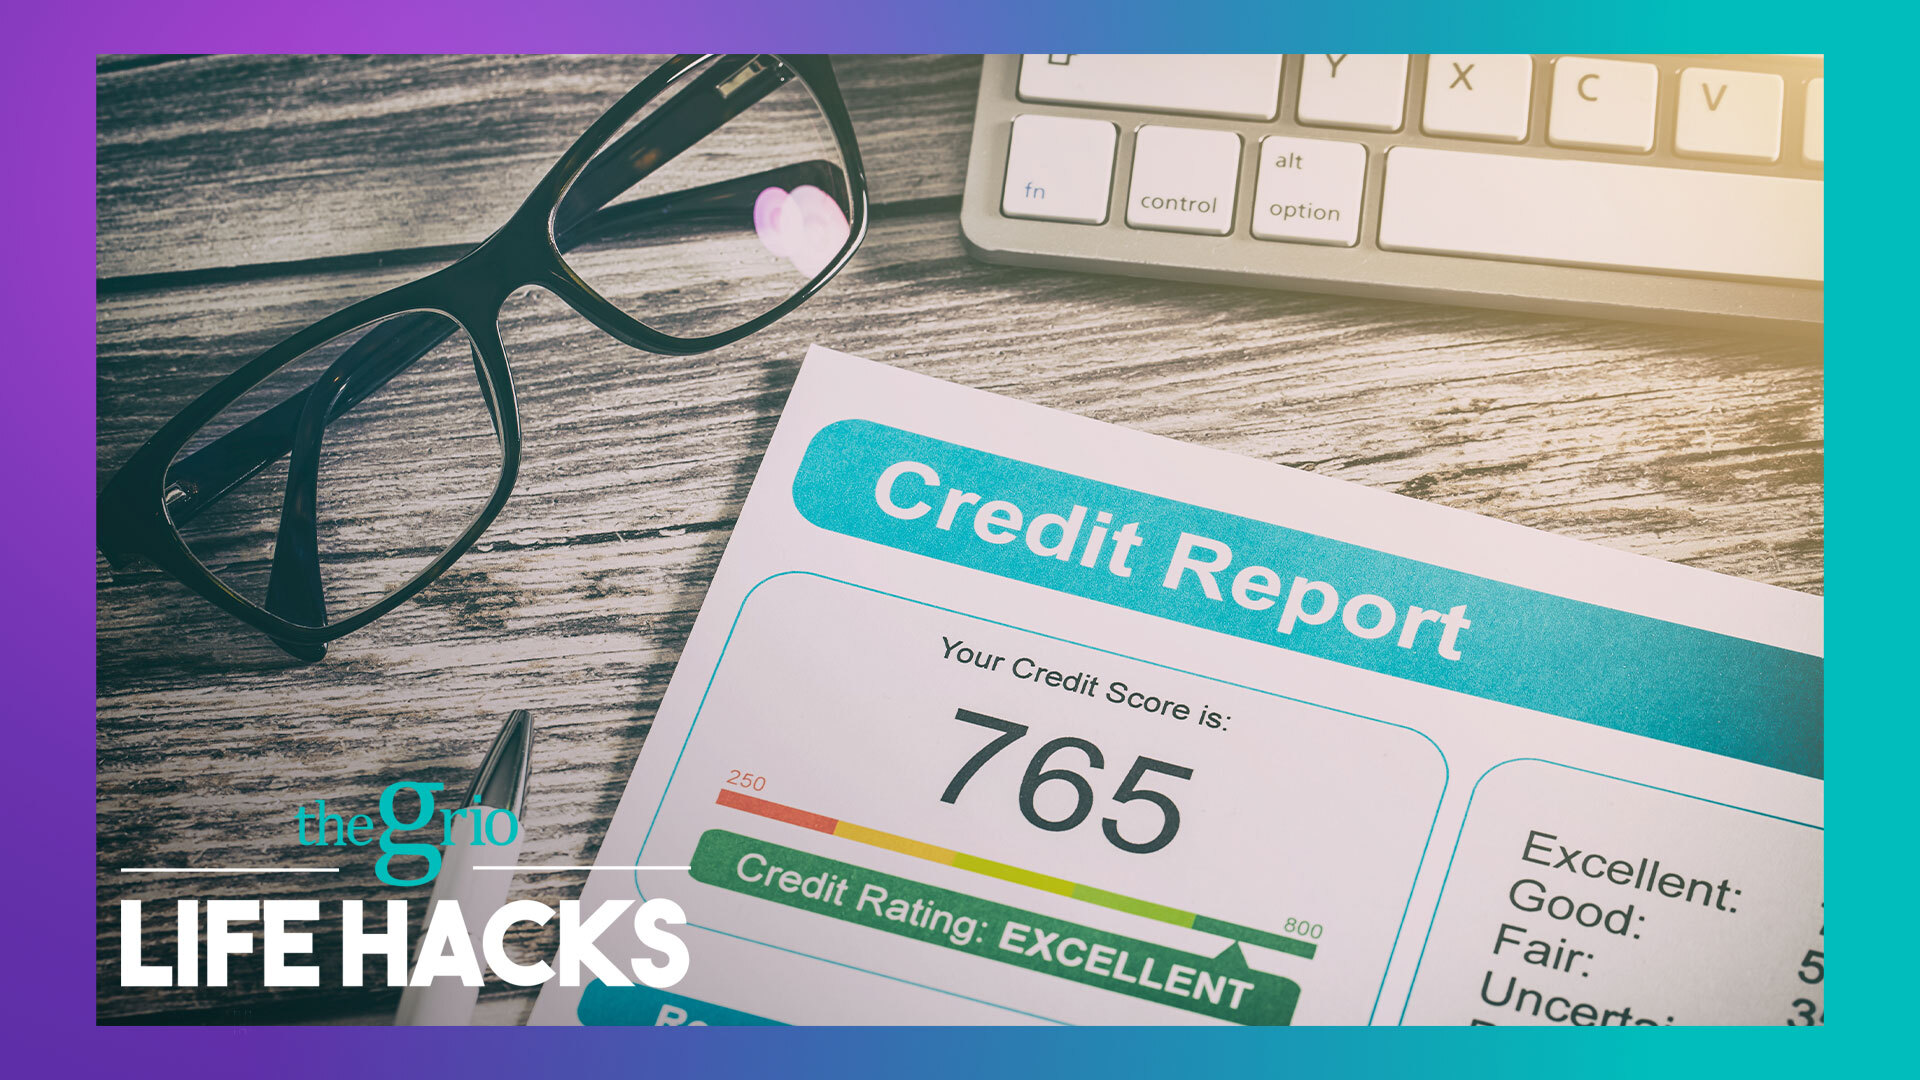 Watch: Credit score management | Life Hacks